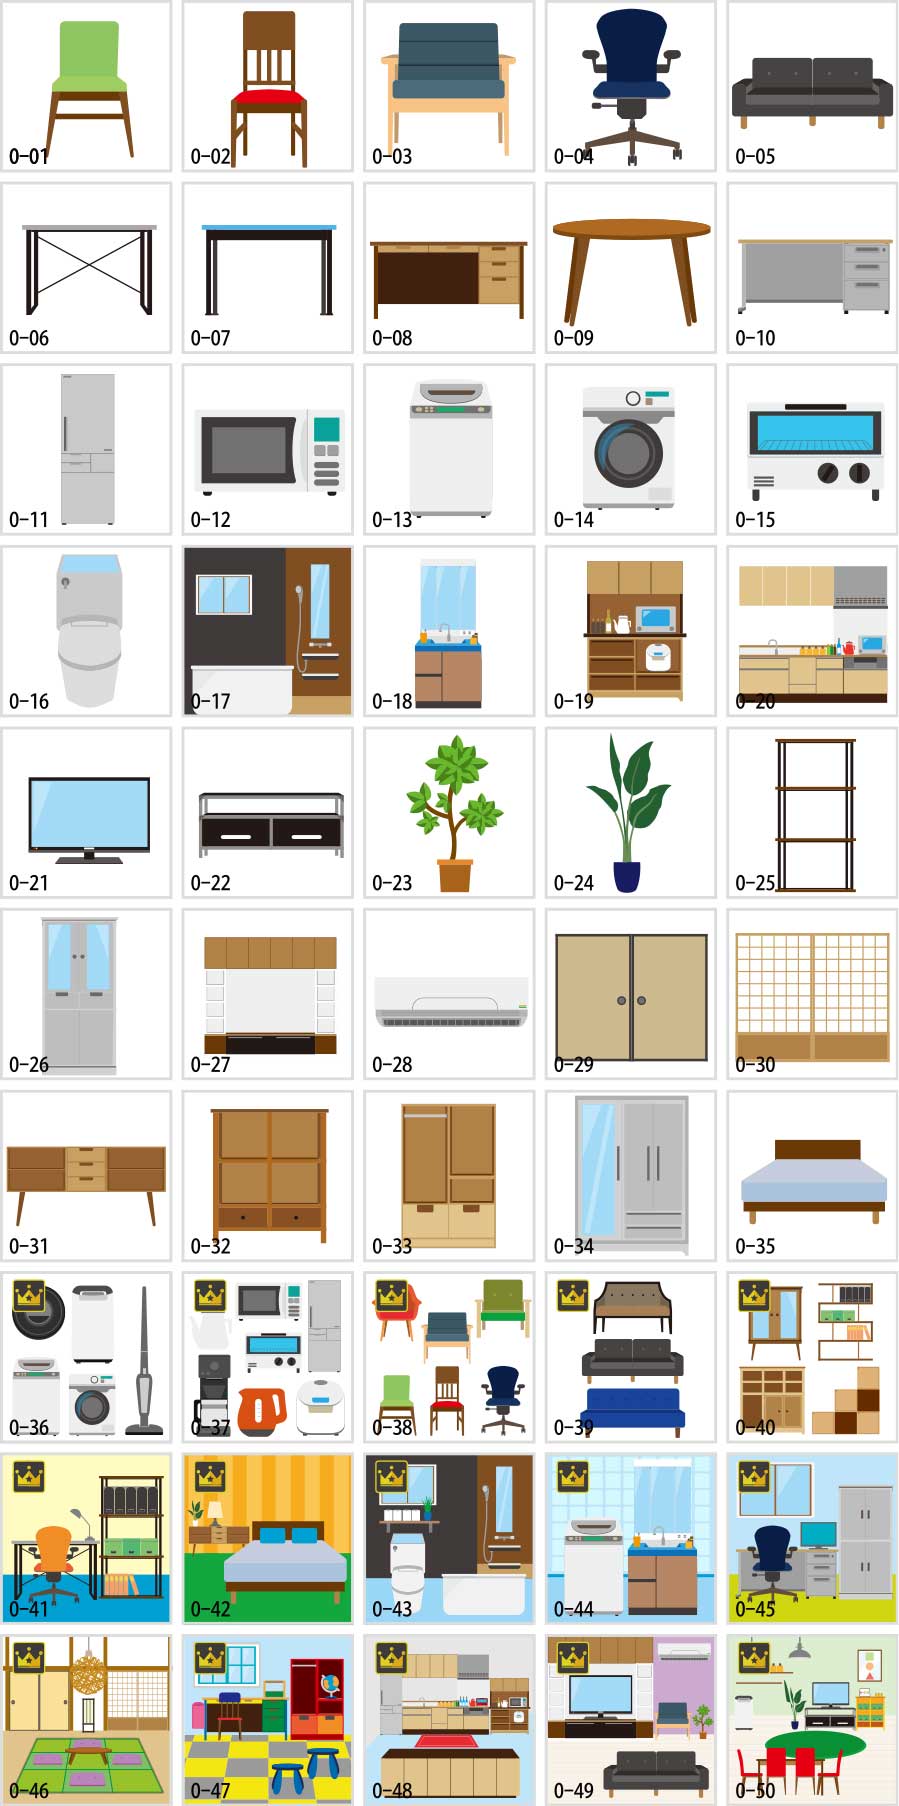 Furniture illustrations